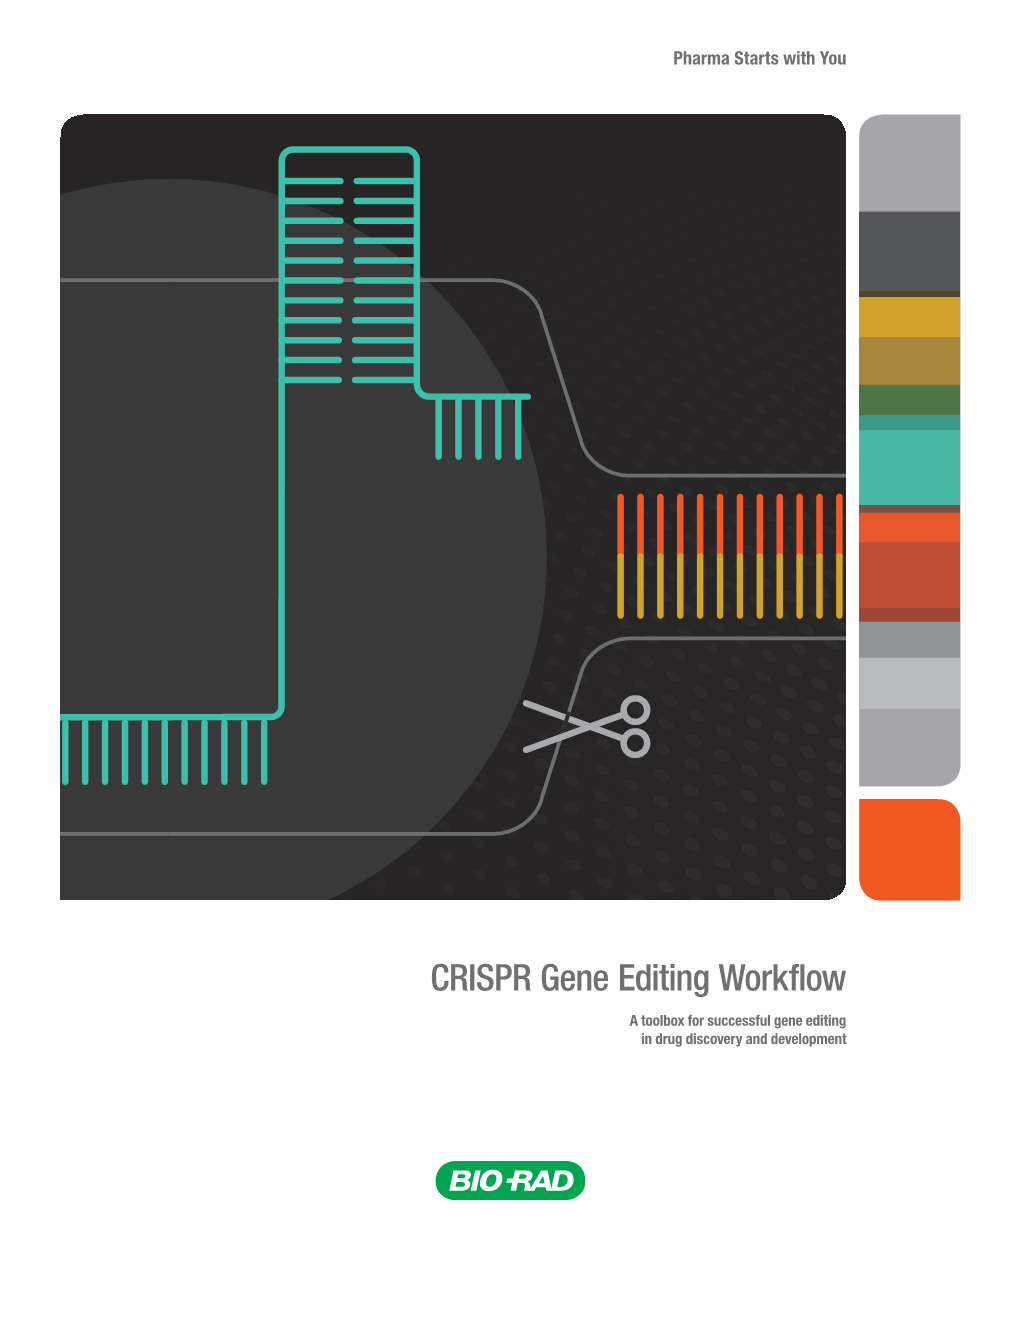 CRISPR Gene Editing Workflow